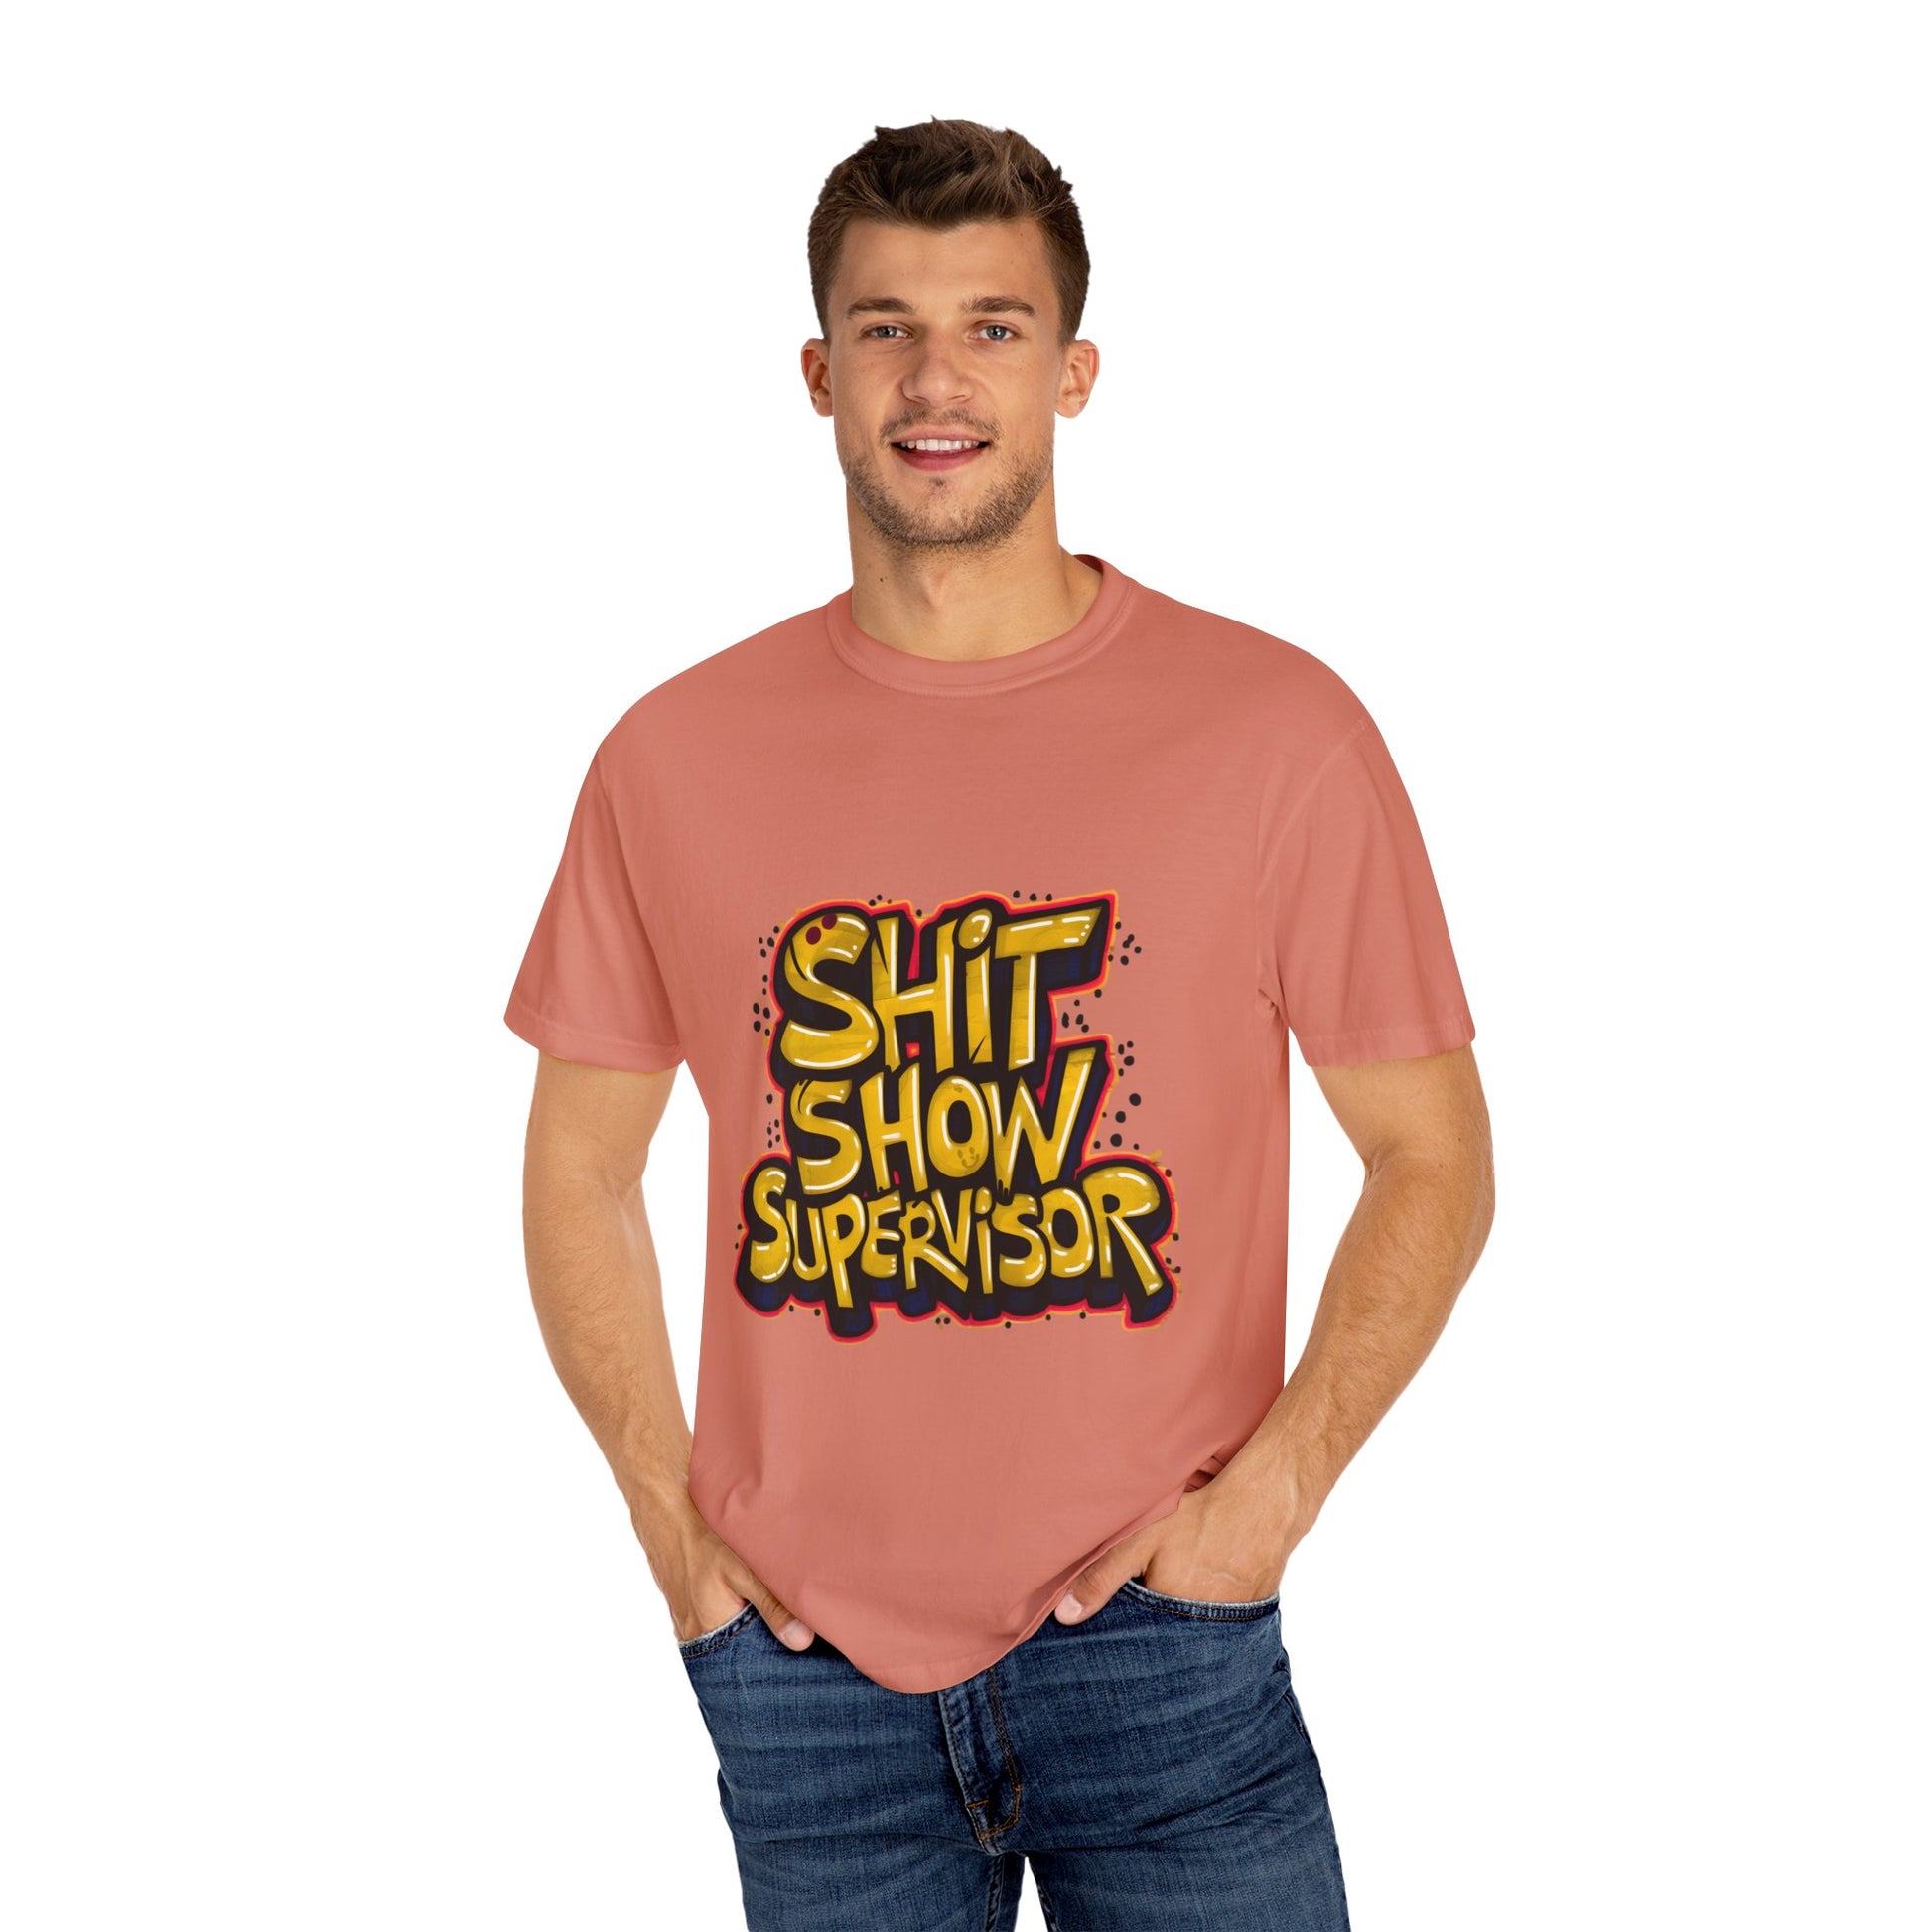 Shit Show Supervisor Urban Sarcastic Graphic Unisex Garment Dyed T-shirt Cotton Funny Humorous Graphic Soft Premium Unisex Men Women Terracotta T-shirt Birthday Gift-57